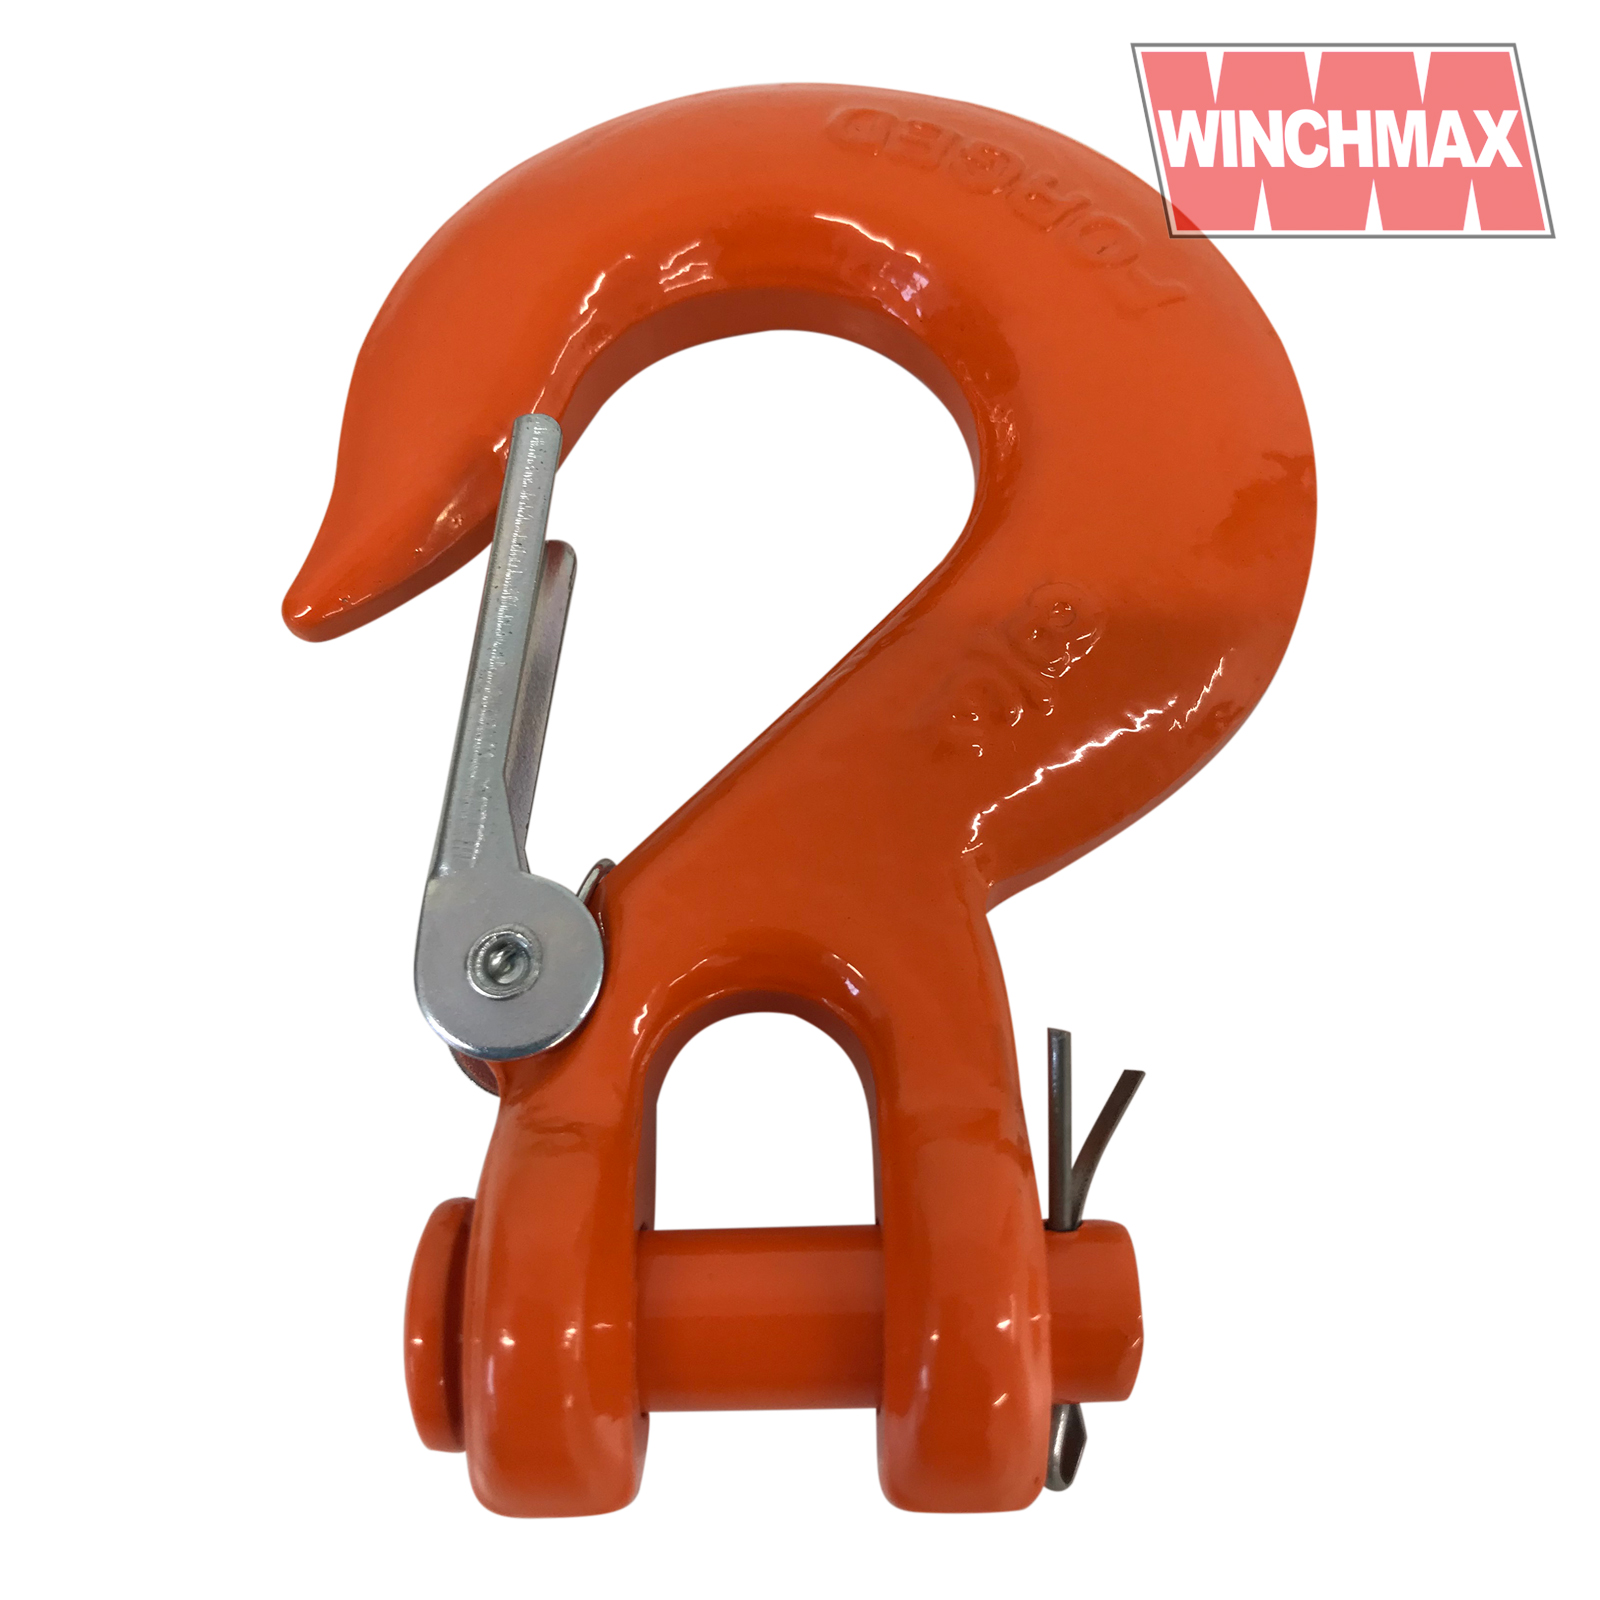 Winchmax 3/8 Inch Orange Clevis Hook